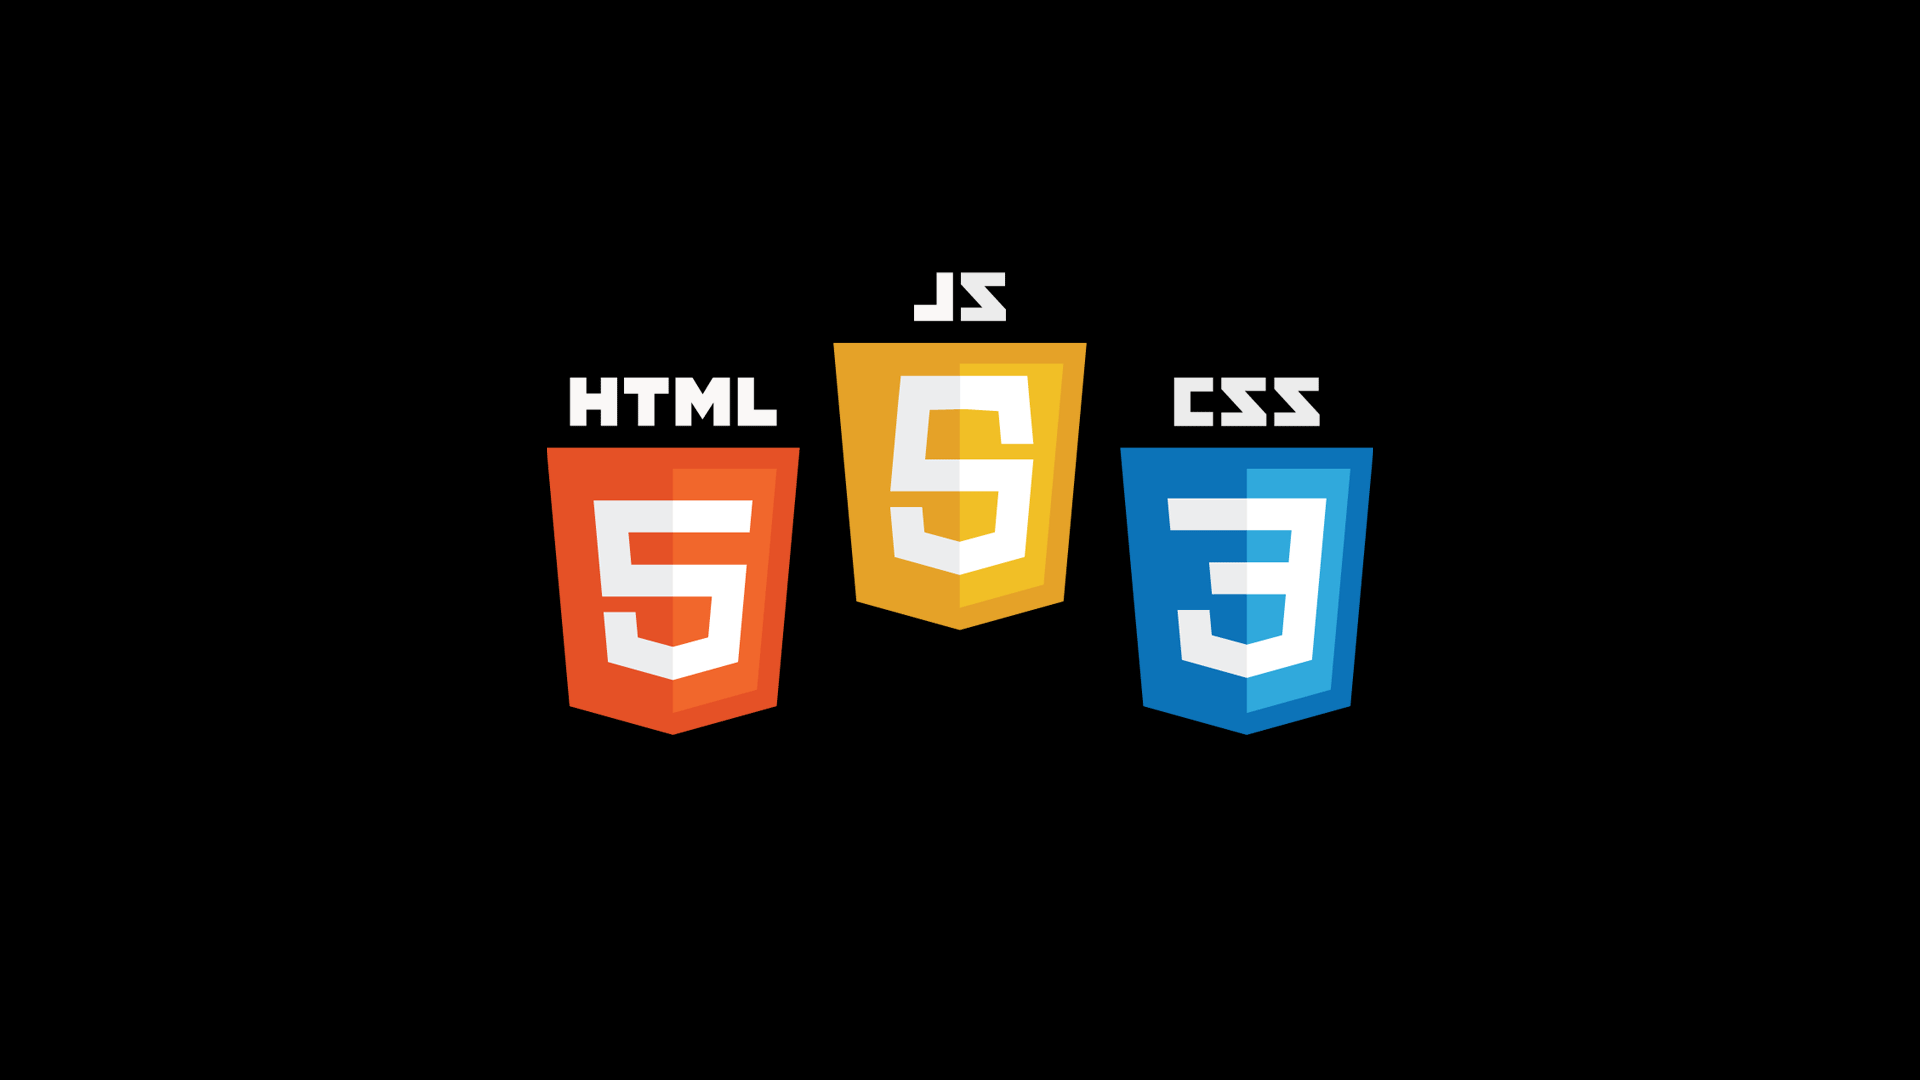 Фон div. Картинка html. Картинки html CSS. Изображение в html. Html CSS js.